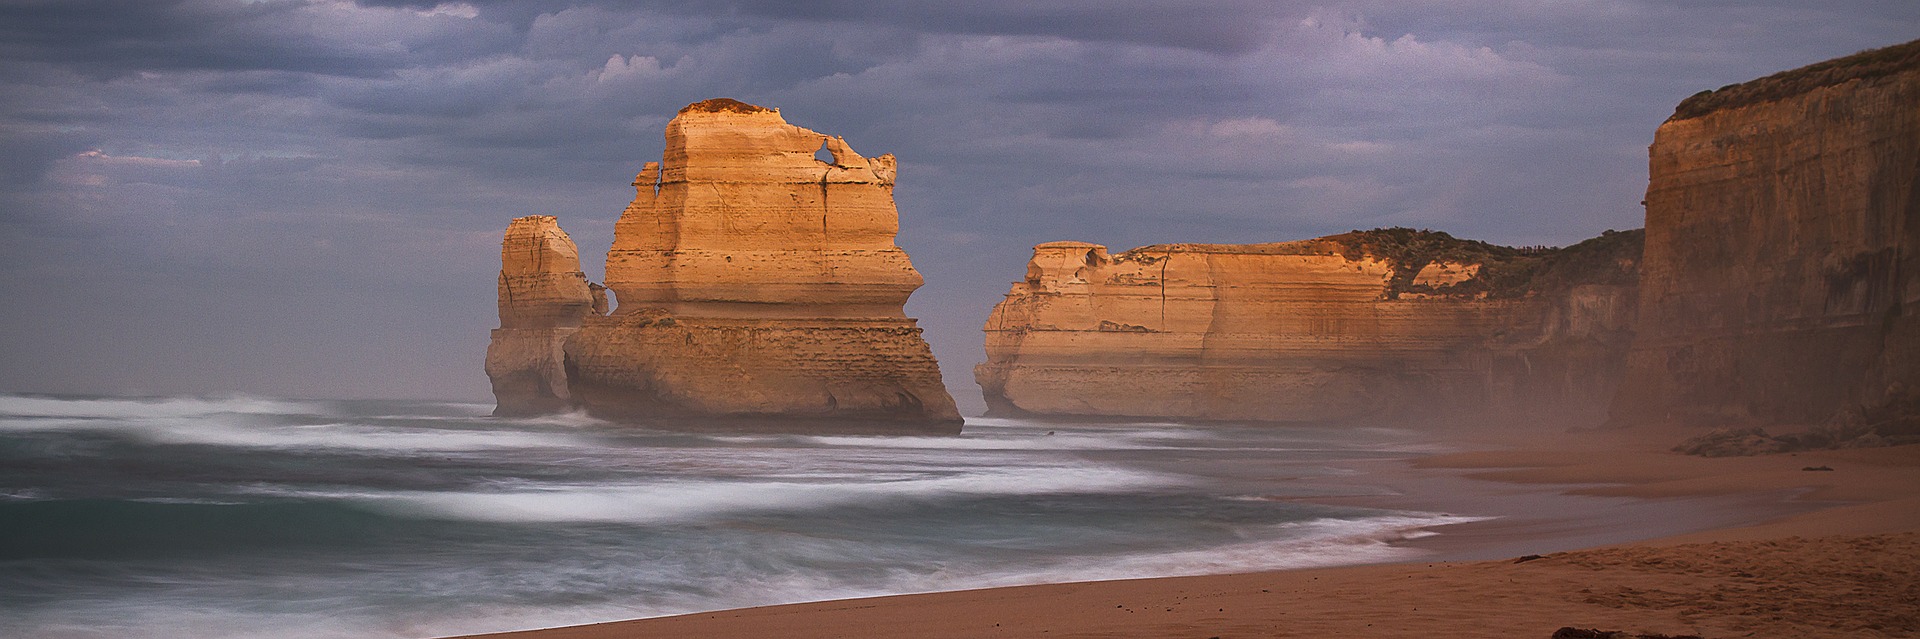 The Seven Sisters, Great Ocean Road, Australia